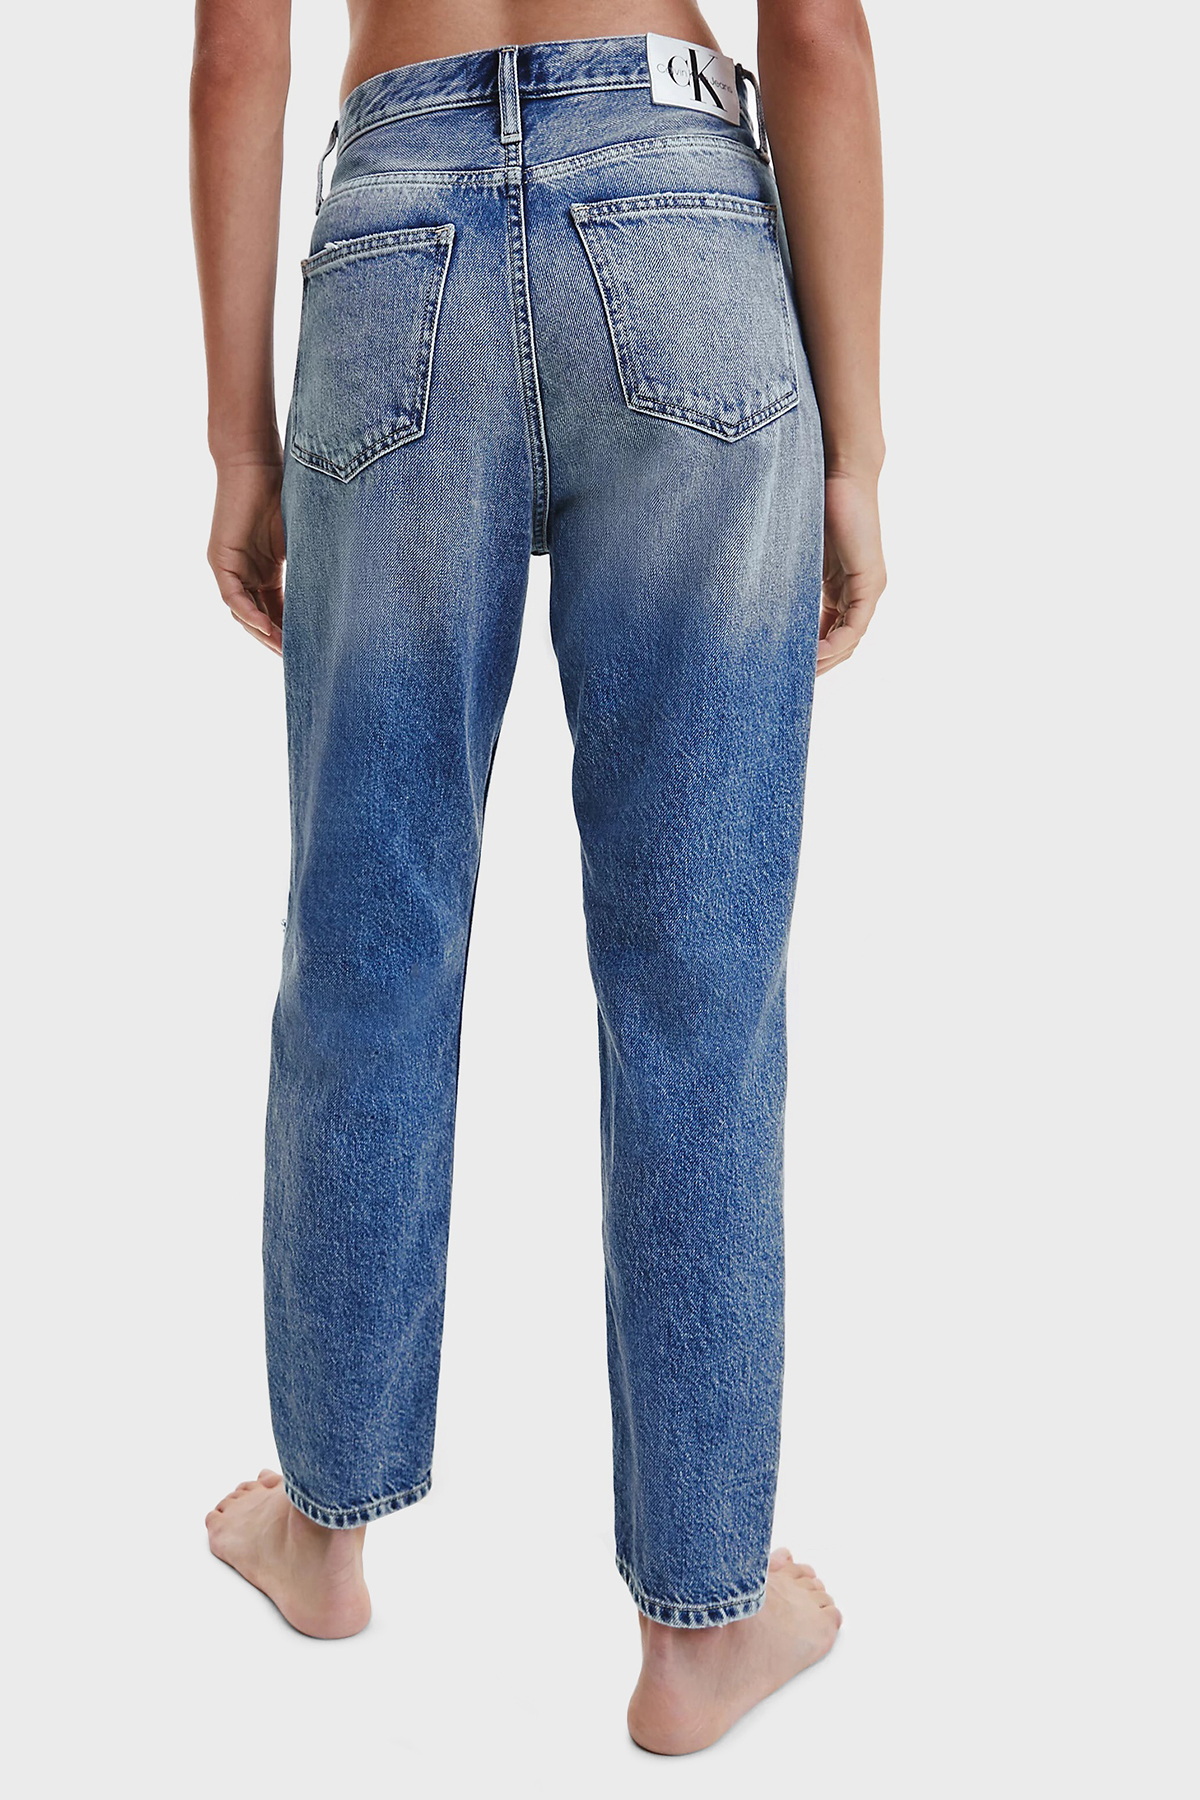 Calvin Klein Pamuklu Yüksek Bel Mom Jeans Bayan Kot Pantolon J20J219362 1A4 MAVİ